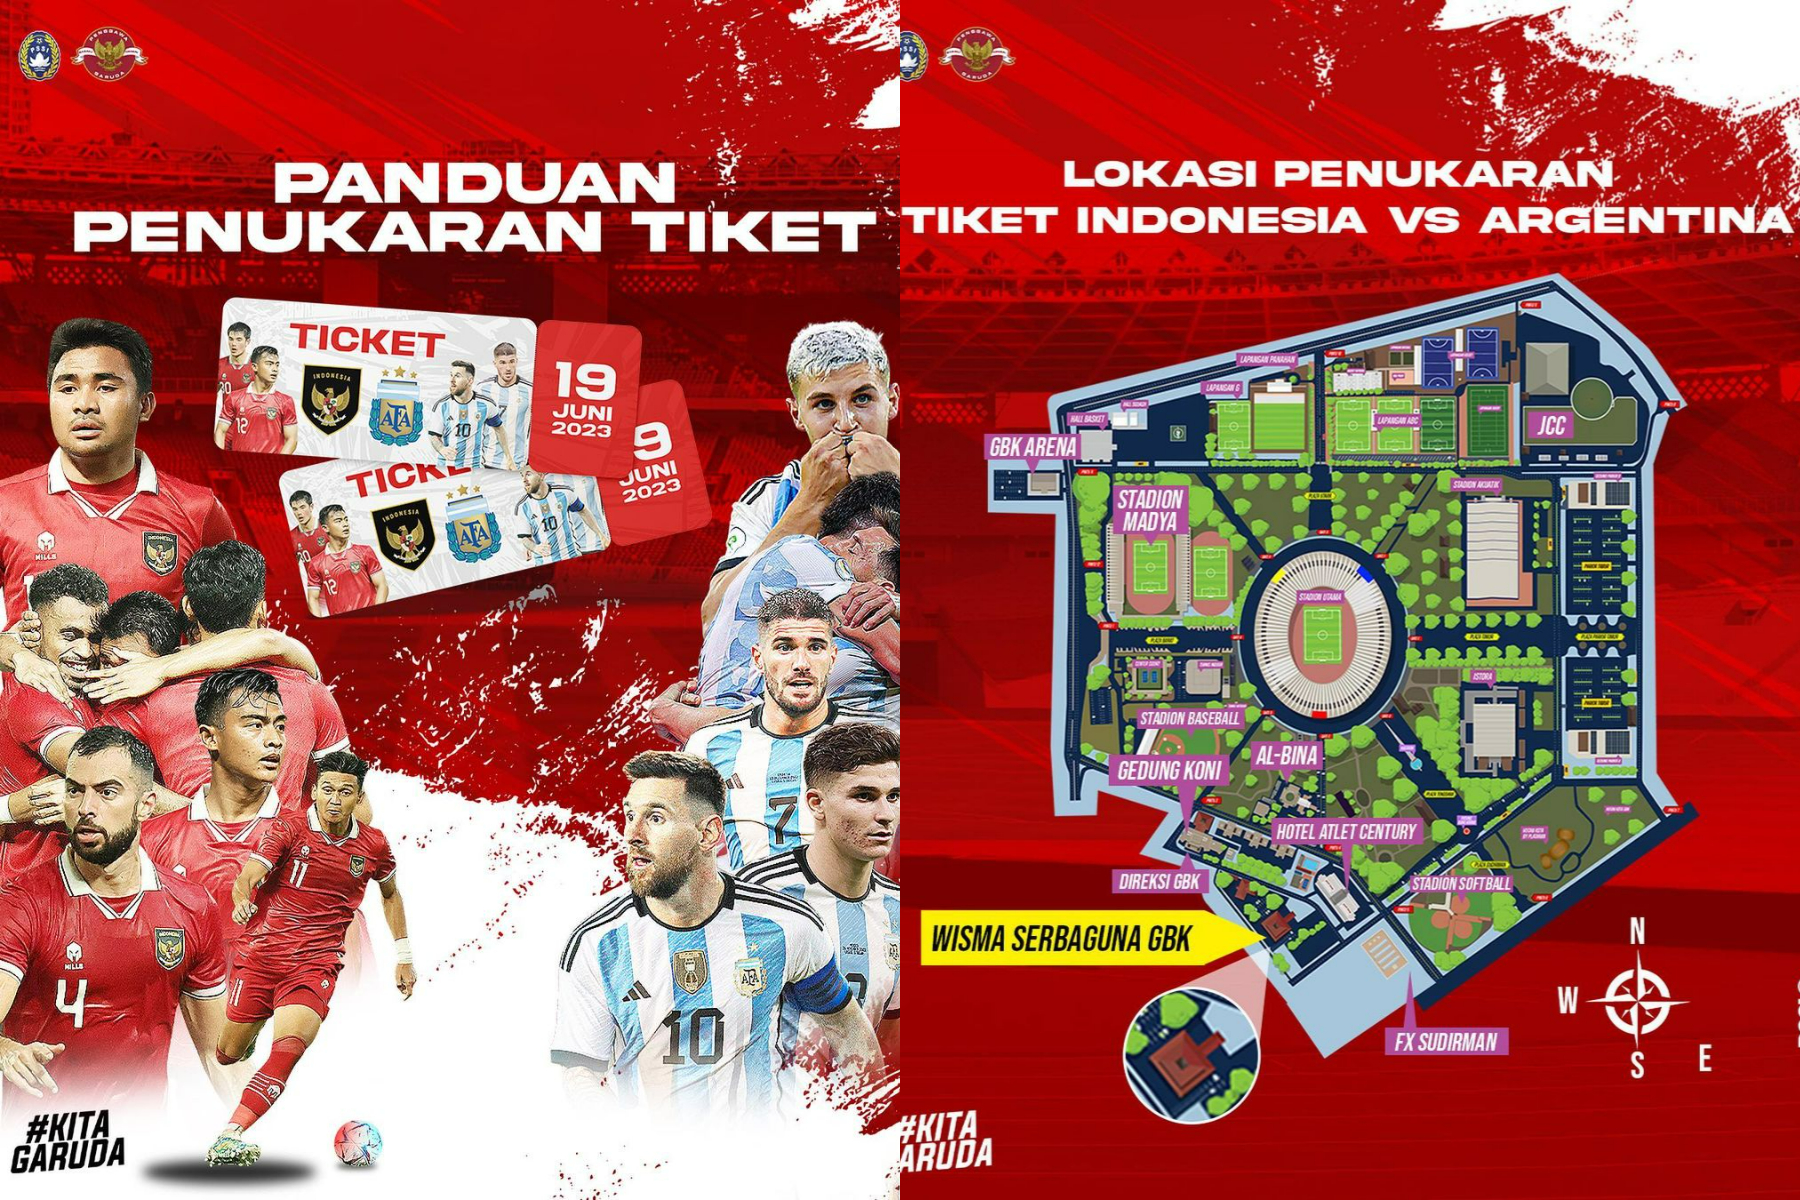 Inilah panduan penukaran tiket Indonesia vs Argentina.